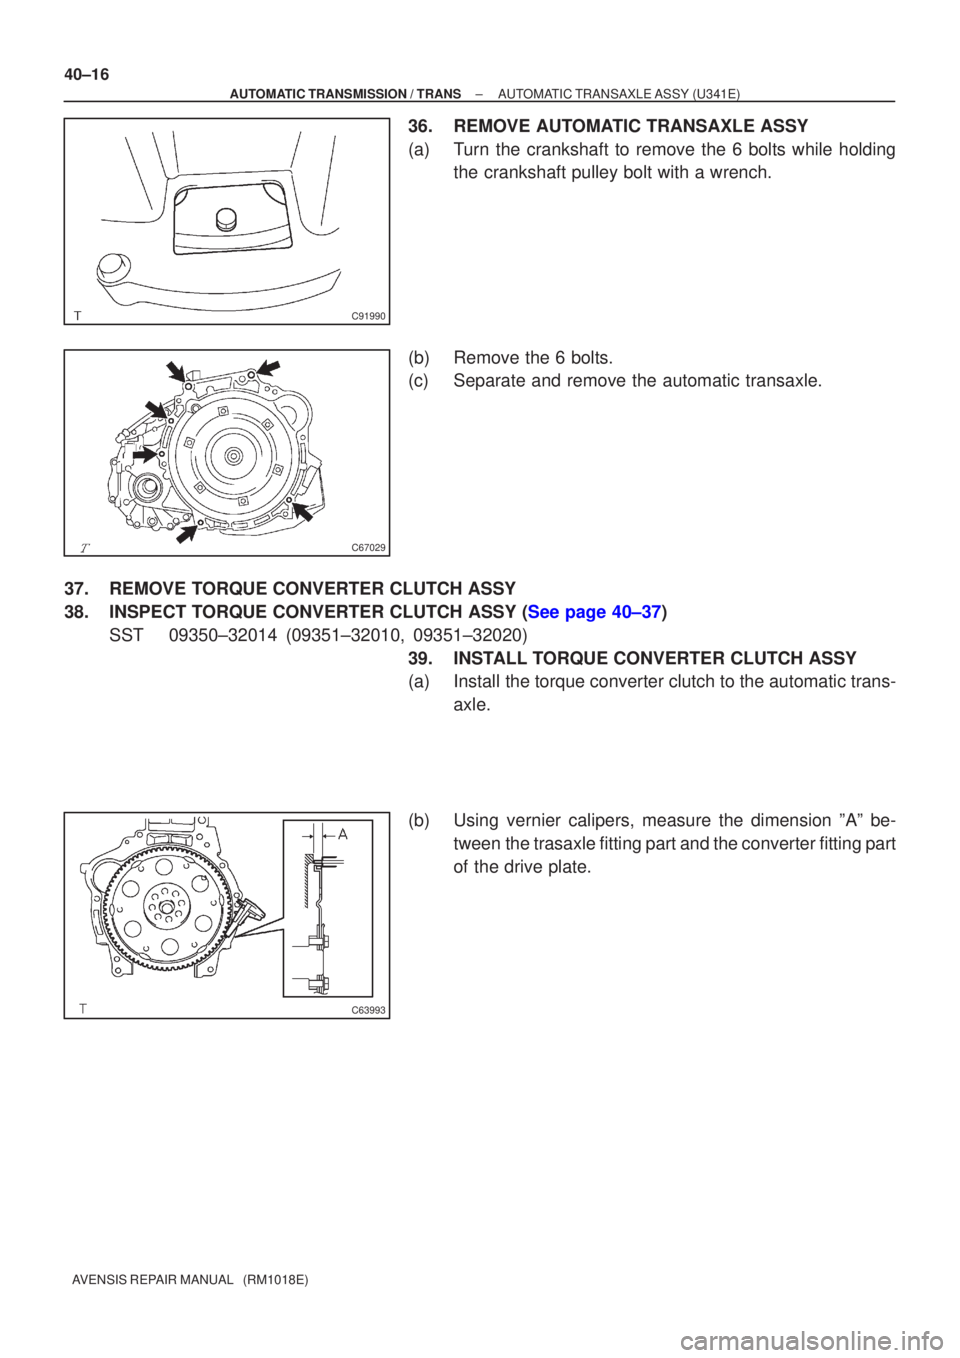 TOYOTA AVENSIS 2005  Service Repair Manual C91990
C67029
C63993
40±16
±
AUTOMATIC TRANSMISSION / TRANS AUTOMATIC TRANSAXLE ASSY (U341E)
AVENSIS REPAIR MANUAL   (RM1018E)
36. REMOVE AUTOMATIC TRANSAXLE ASSY
(a) Turn the crankshaft to remove t